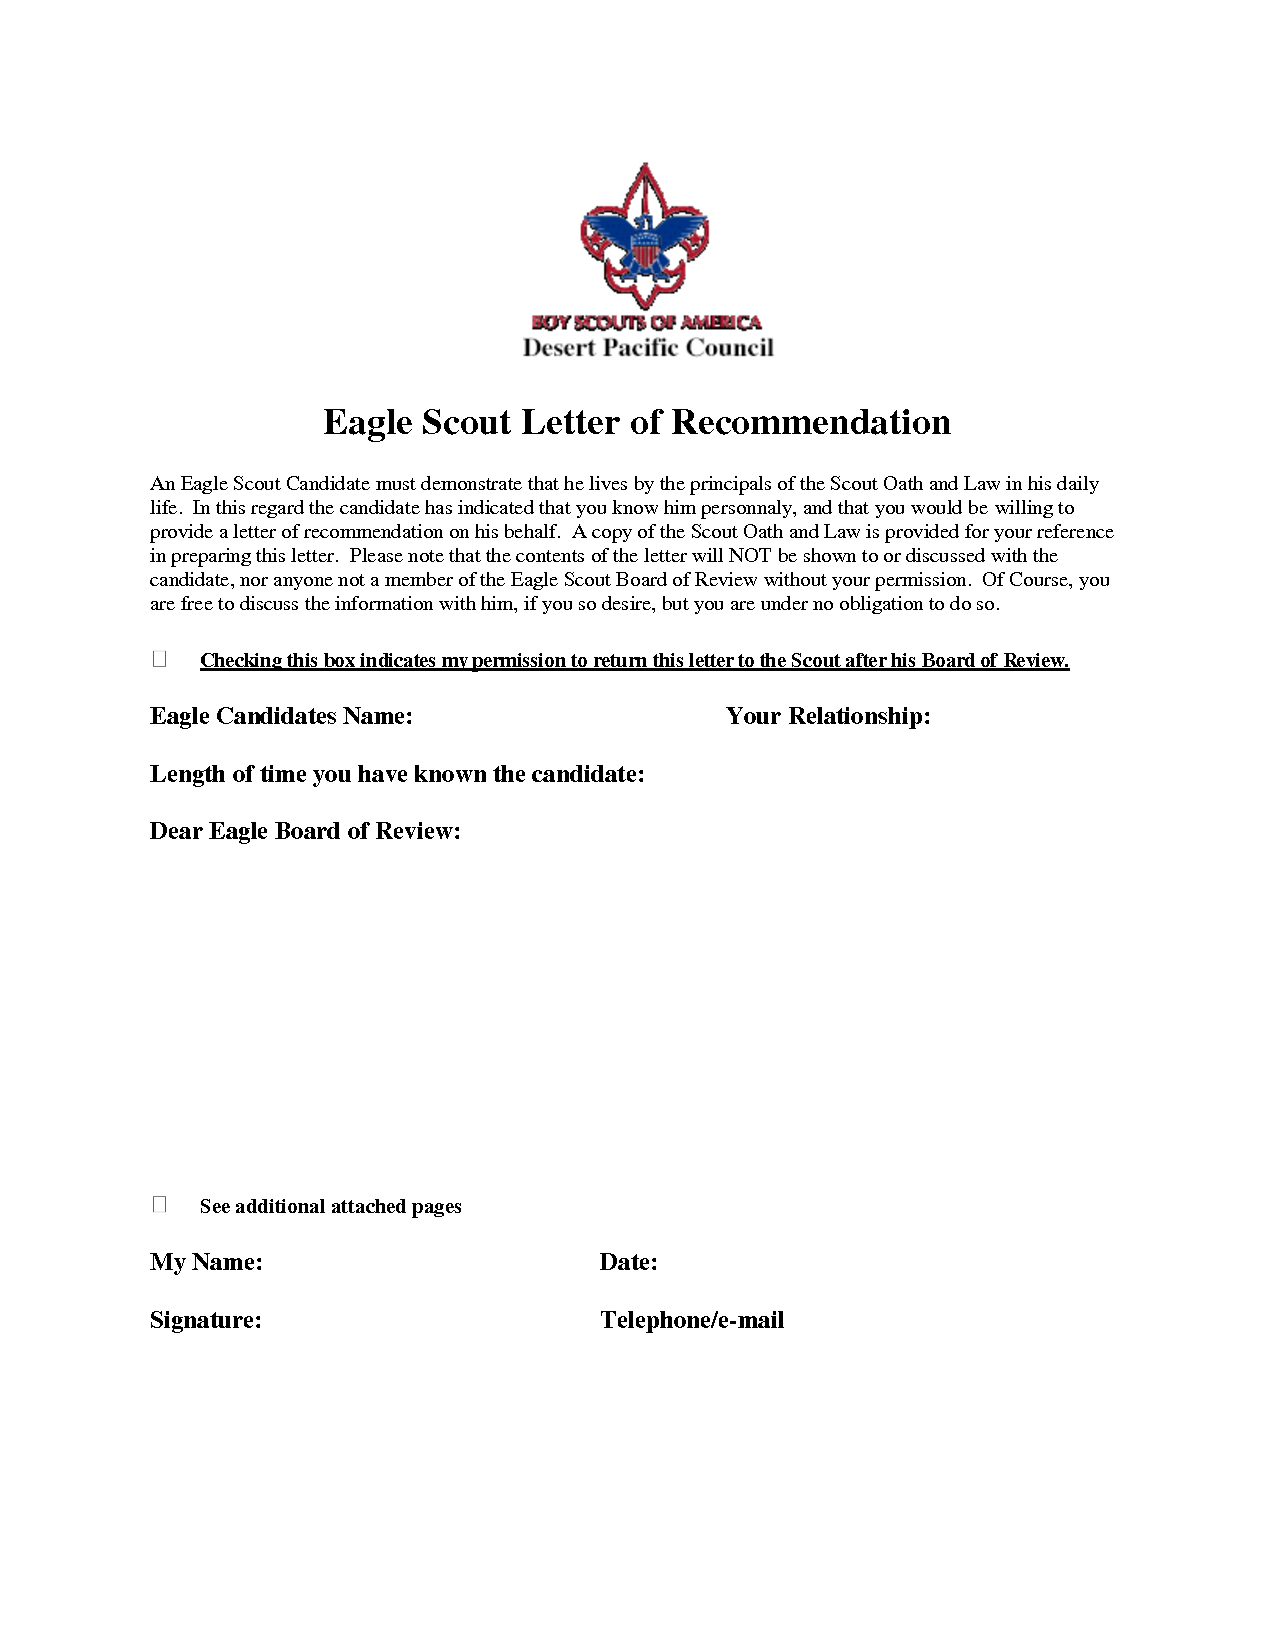 Eagle Scout Donation Letter Template - Eagle Scout Re Mendation Letter Sample